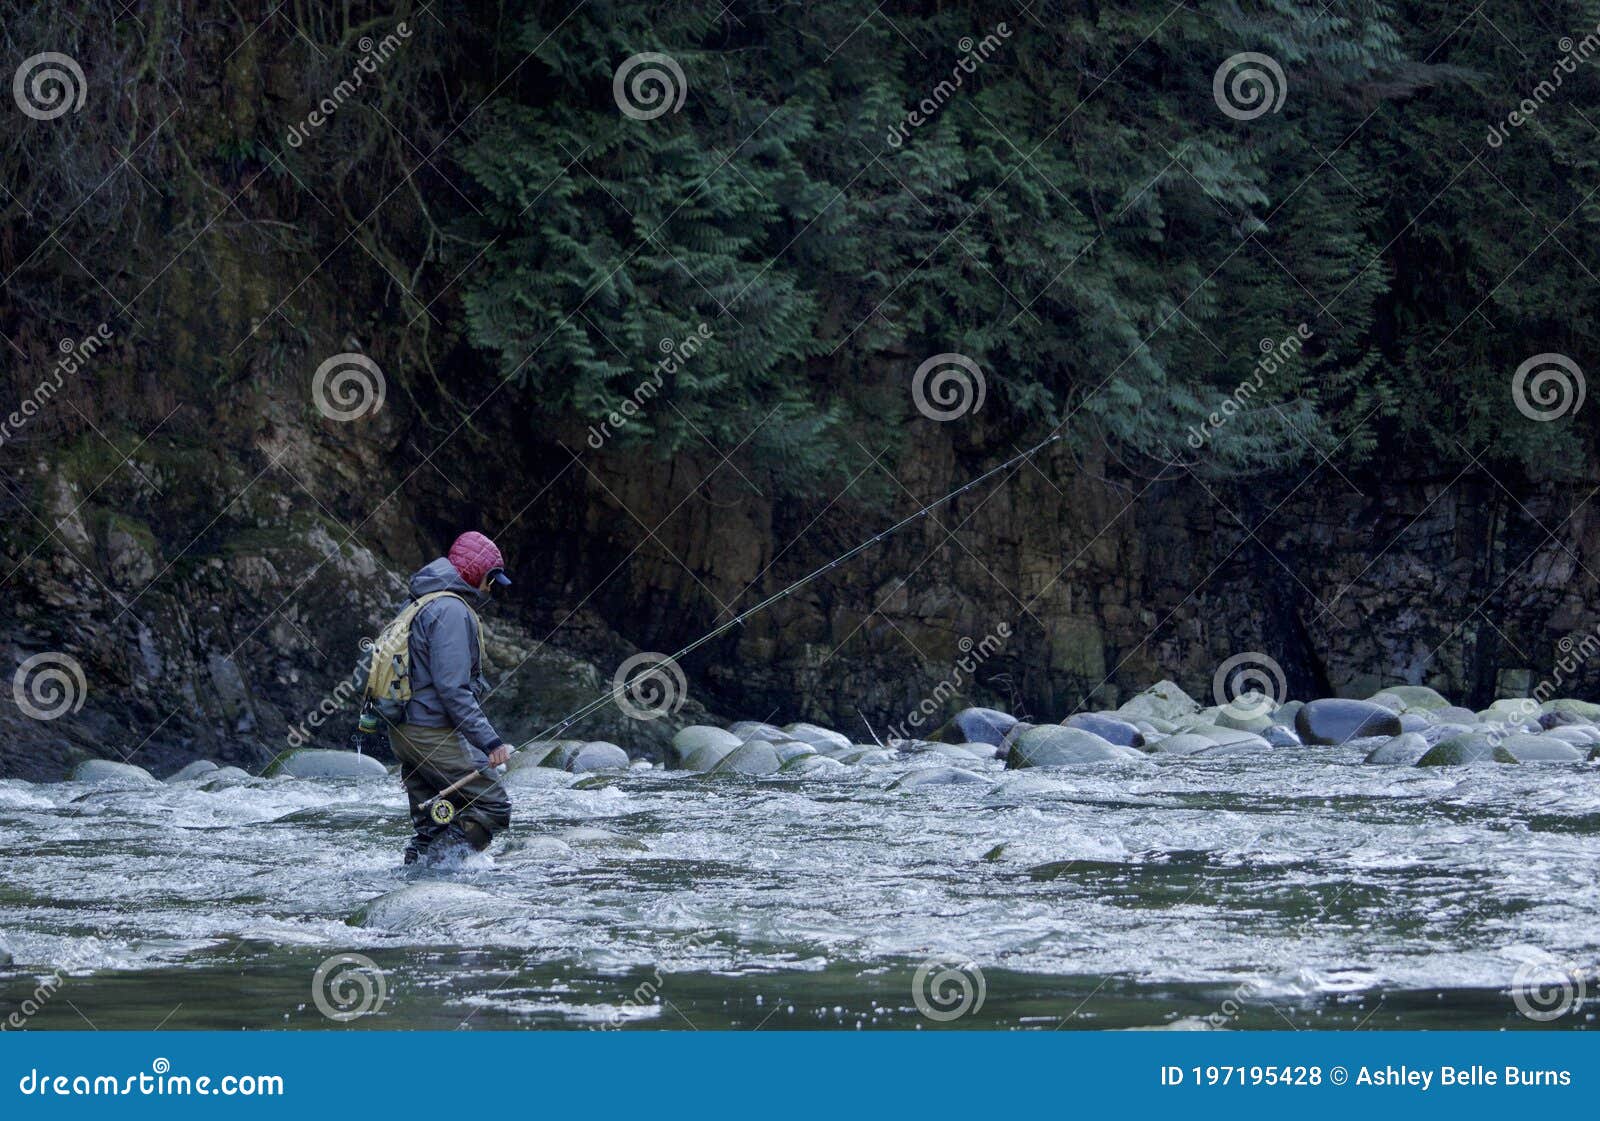 https://thumbs.dreamstime.com/z/fisherman-crosses-capilano-river-to-fish-steelhead-fly-fishing-rod-north-vancouver-british-columbia-canada-197195428.jpg